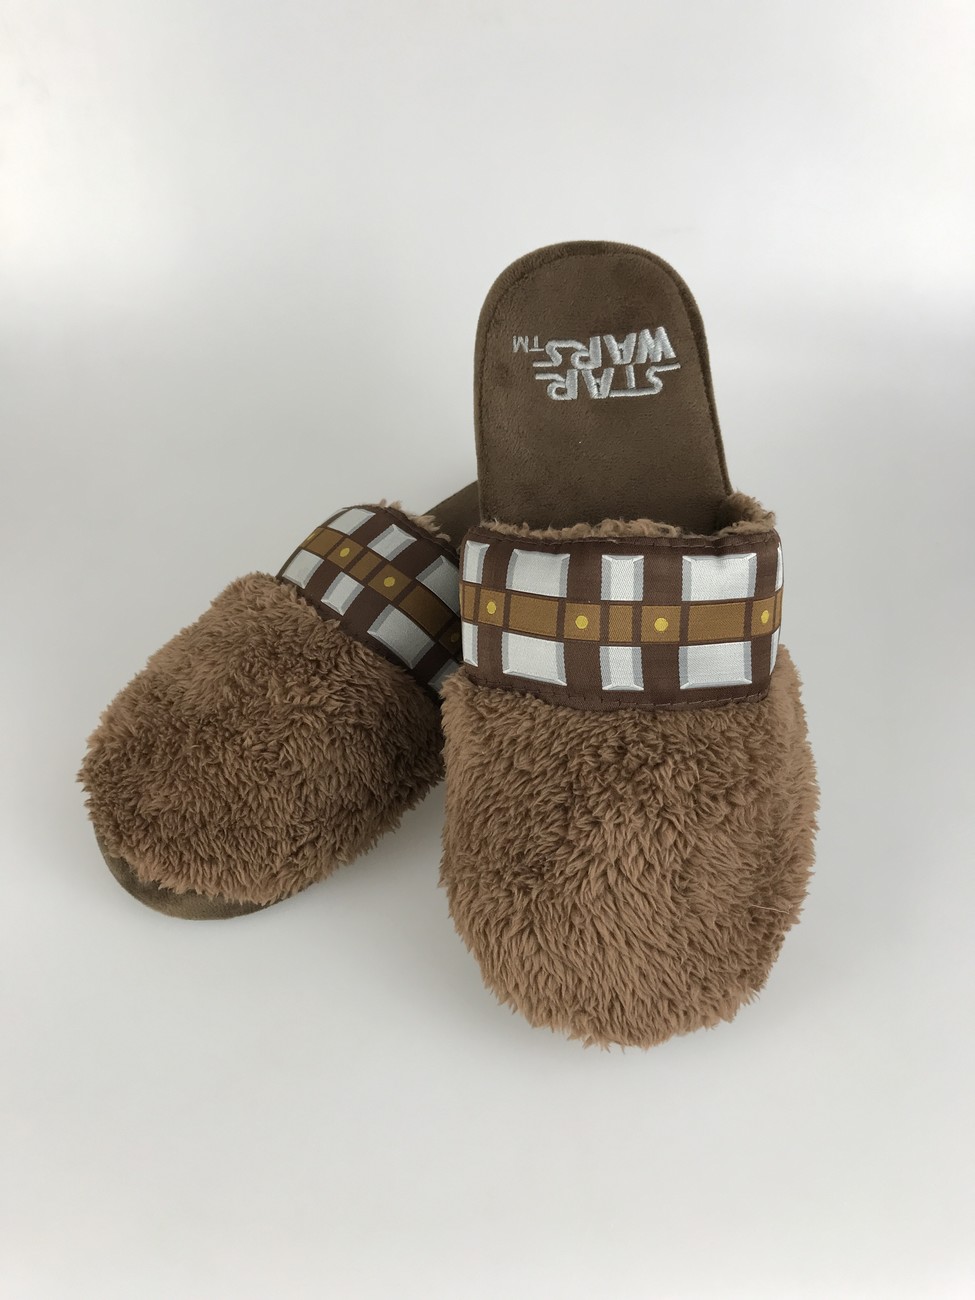 Pantoffels Wars Chewbacca | Kleding accessoires voor fans van merchandise